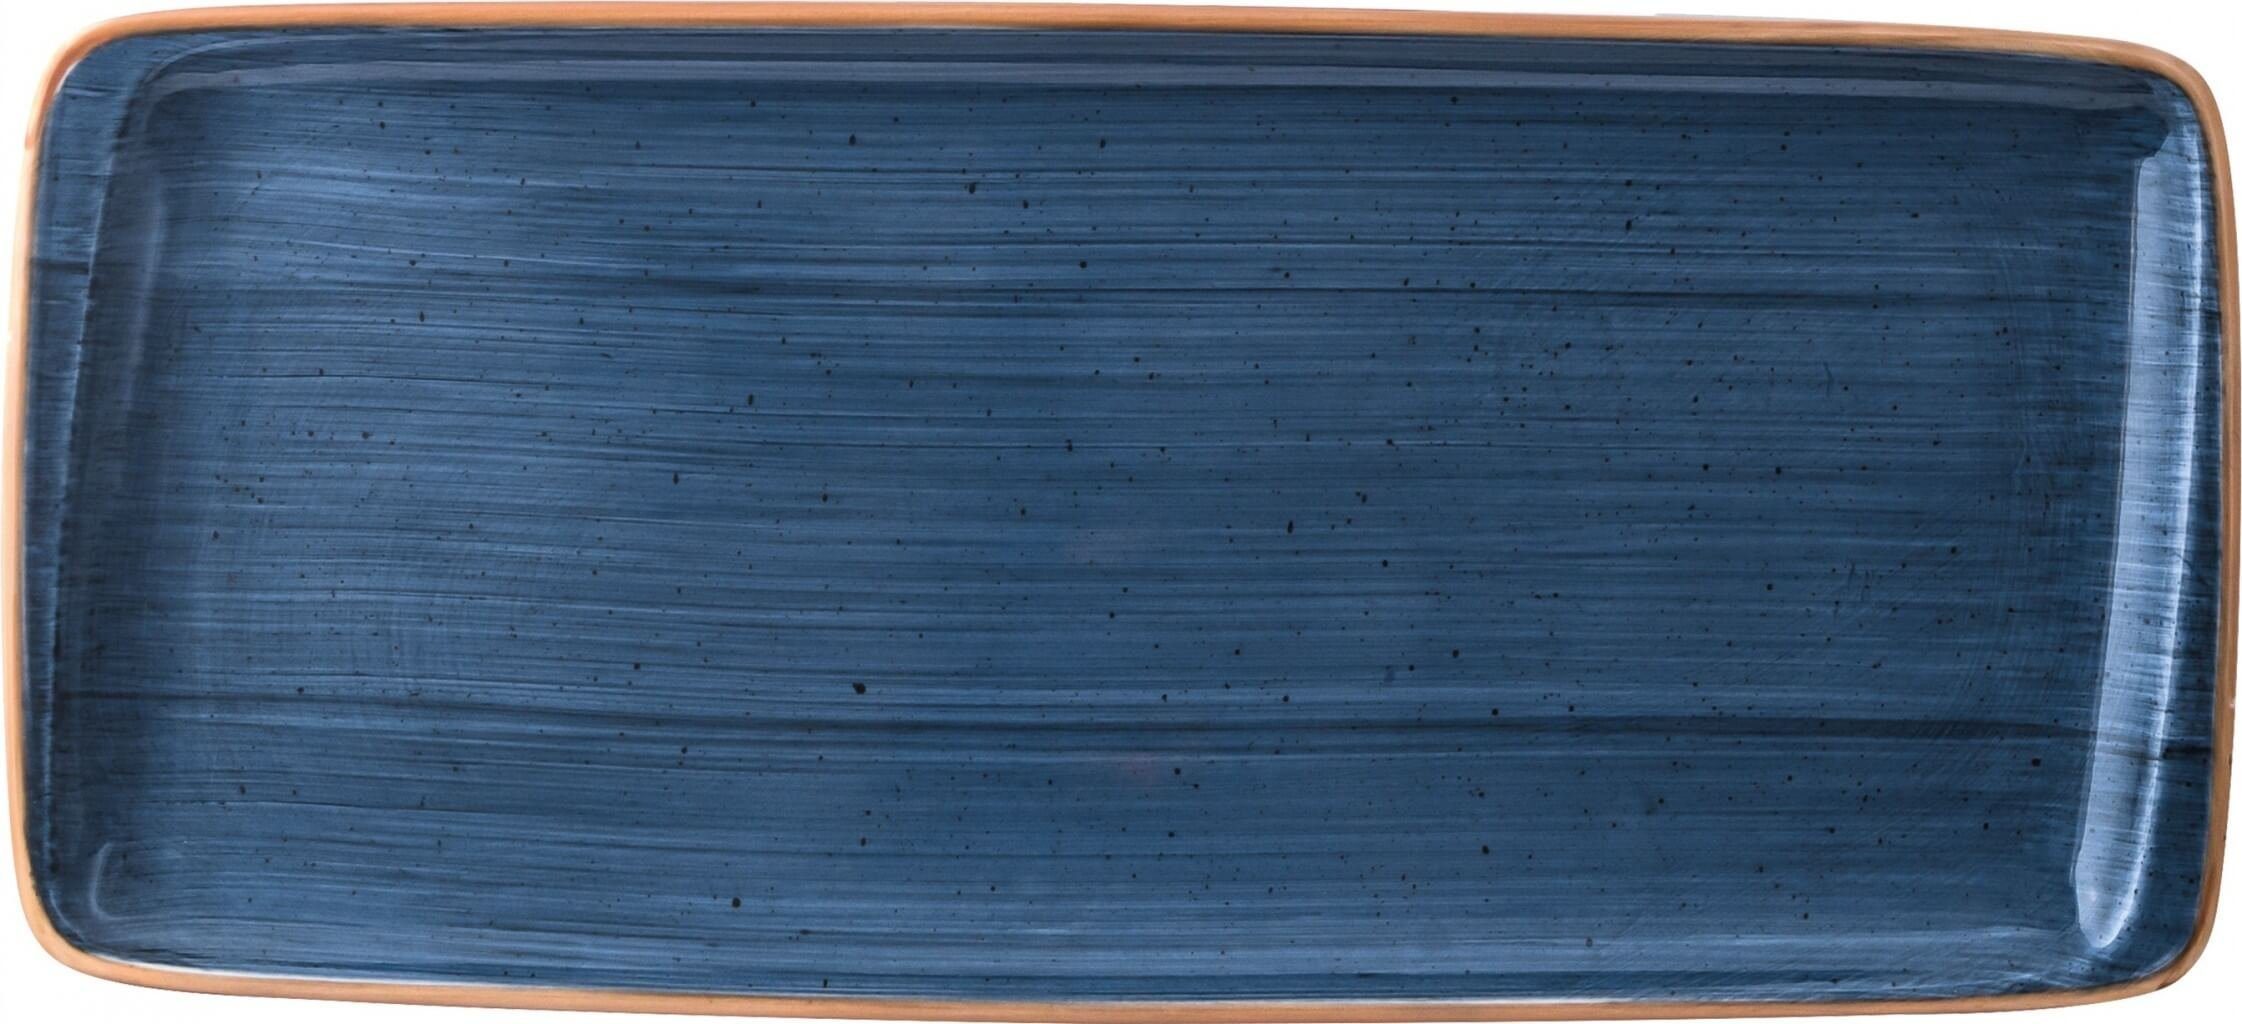 Servierplatten Servierplatte Bonna 6x rechteckig Aura Teller Porzellan Bonna Dusk Blau, 34x16cm